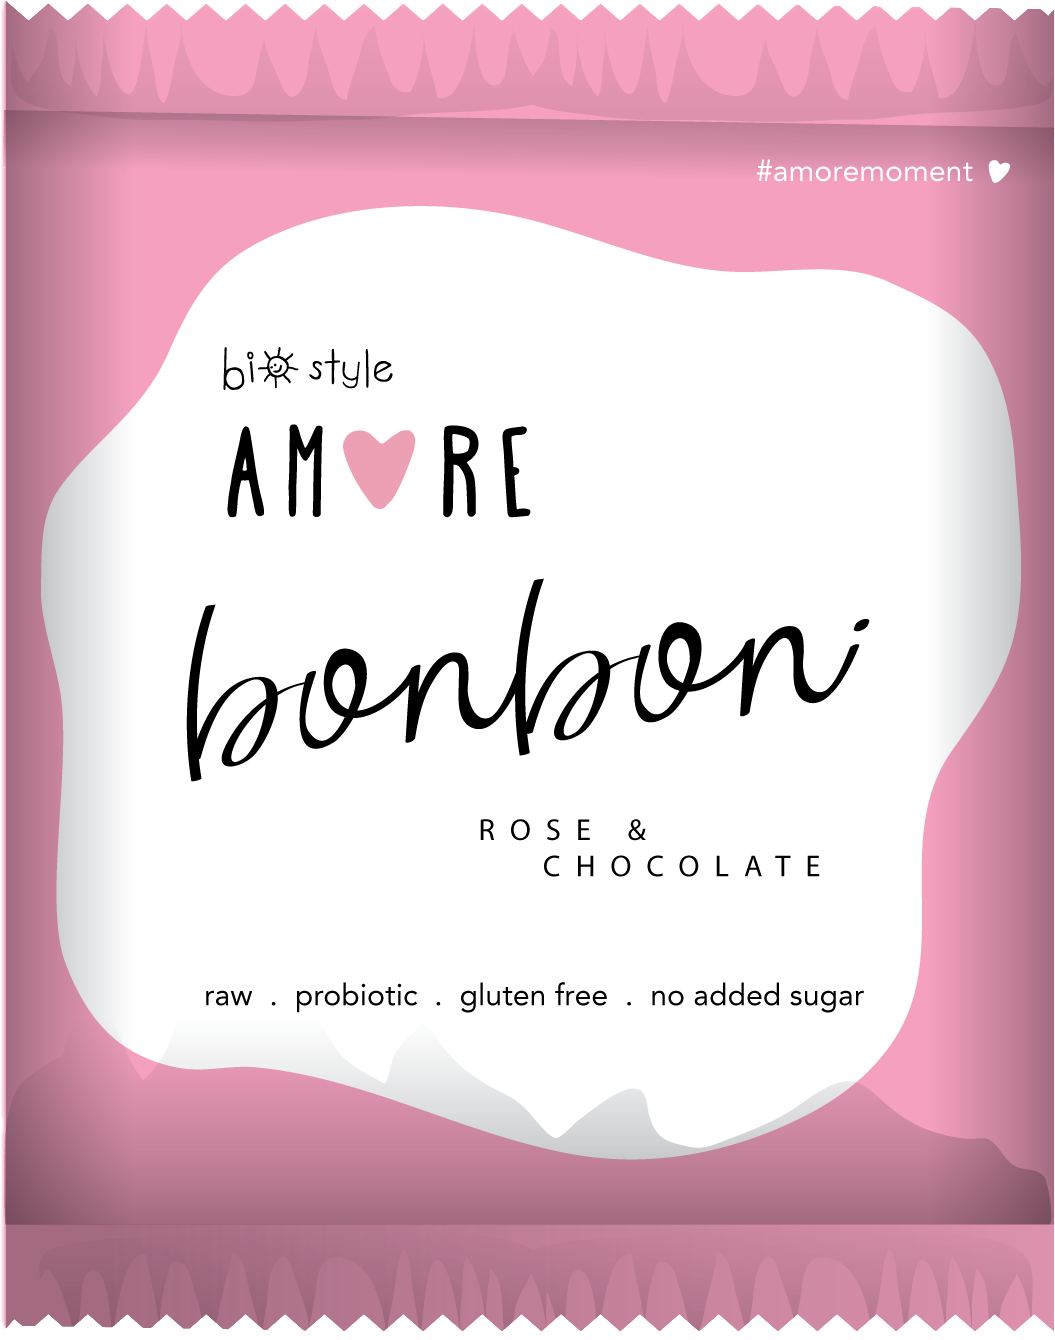 Bio "Rose & Chocolate" AMORE Bonbon glf probiotic 40g